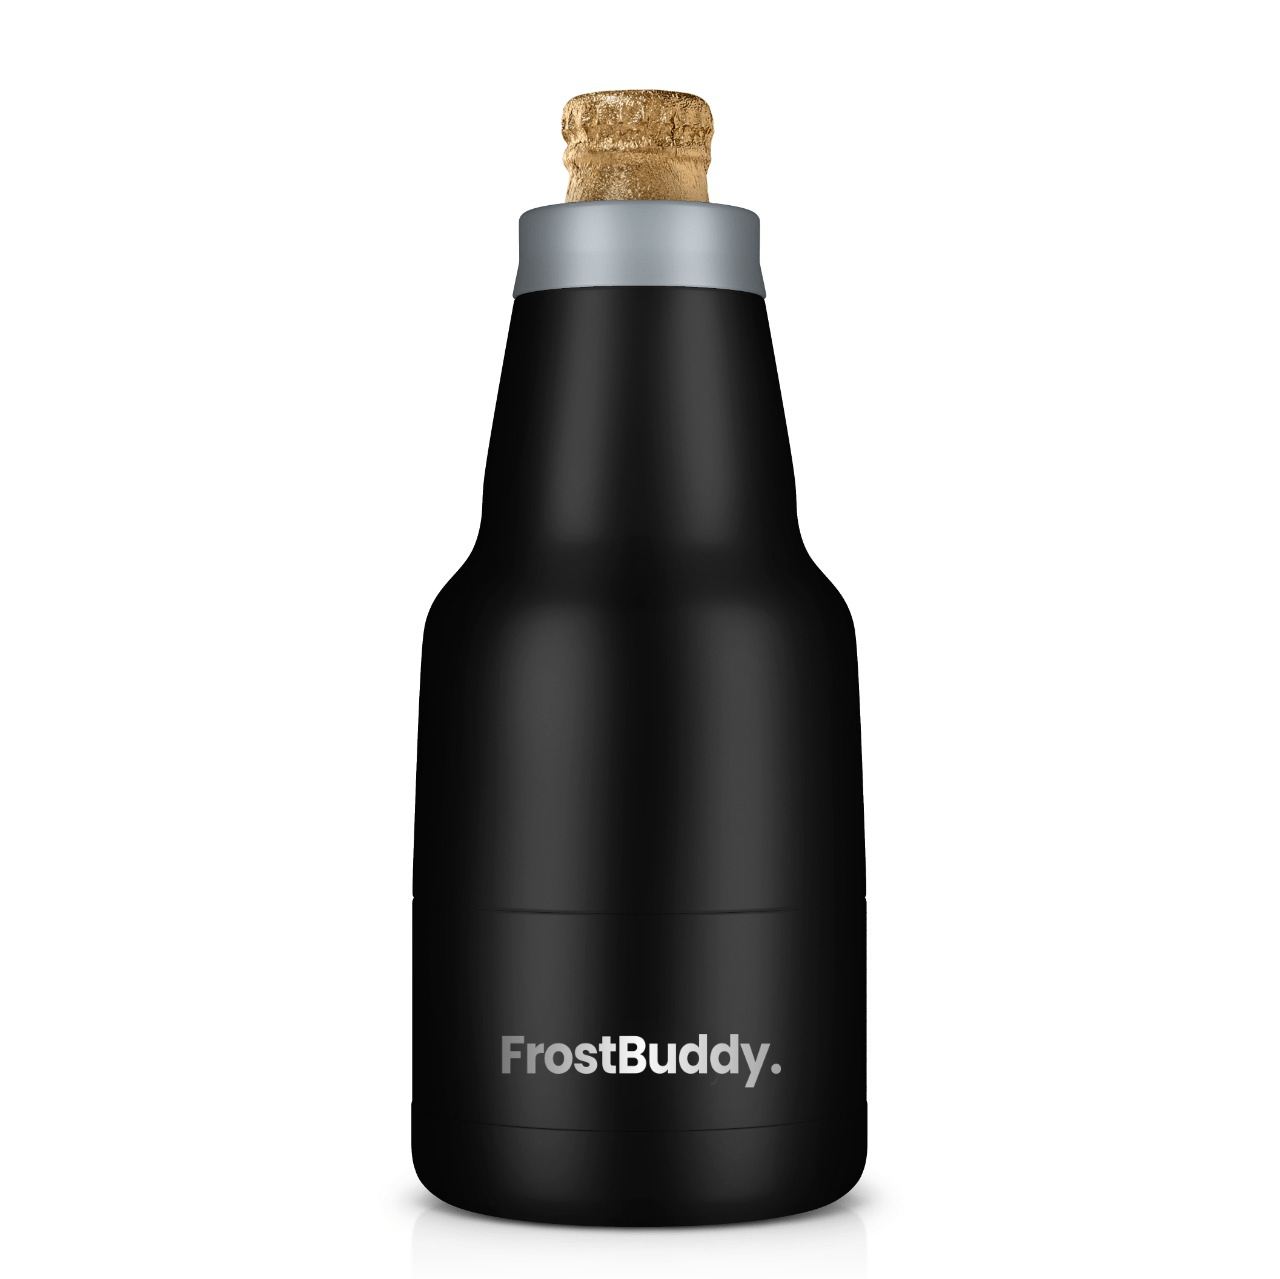 Chubby Buddy  Modelo Bottle Cooler